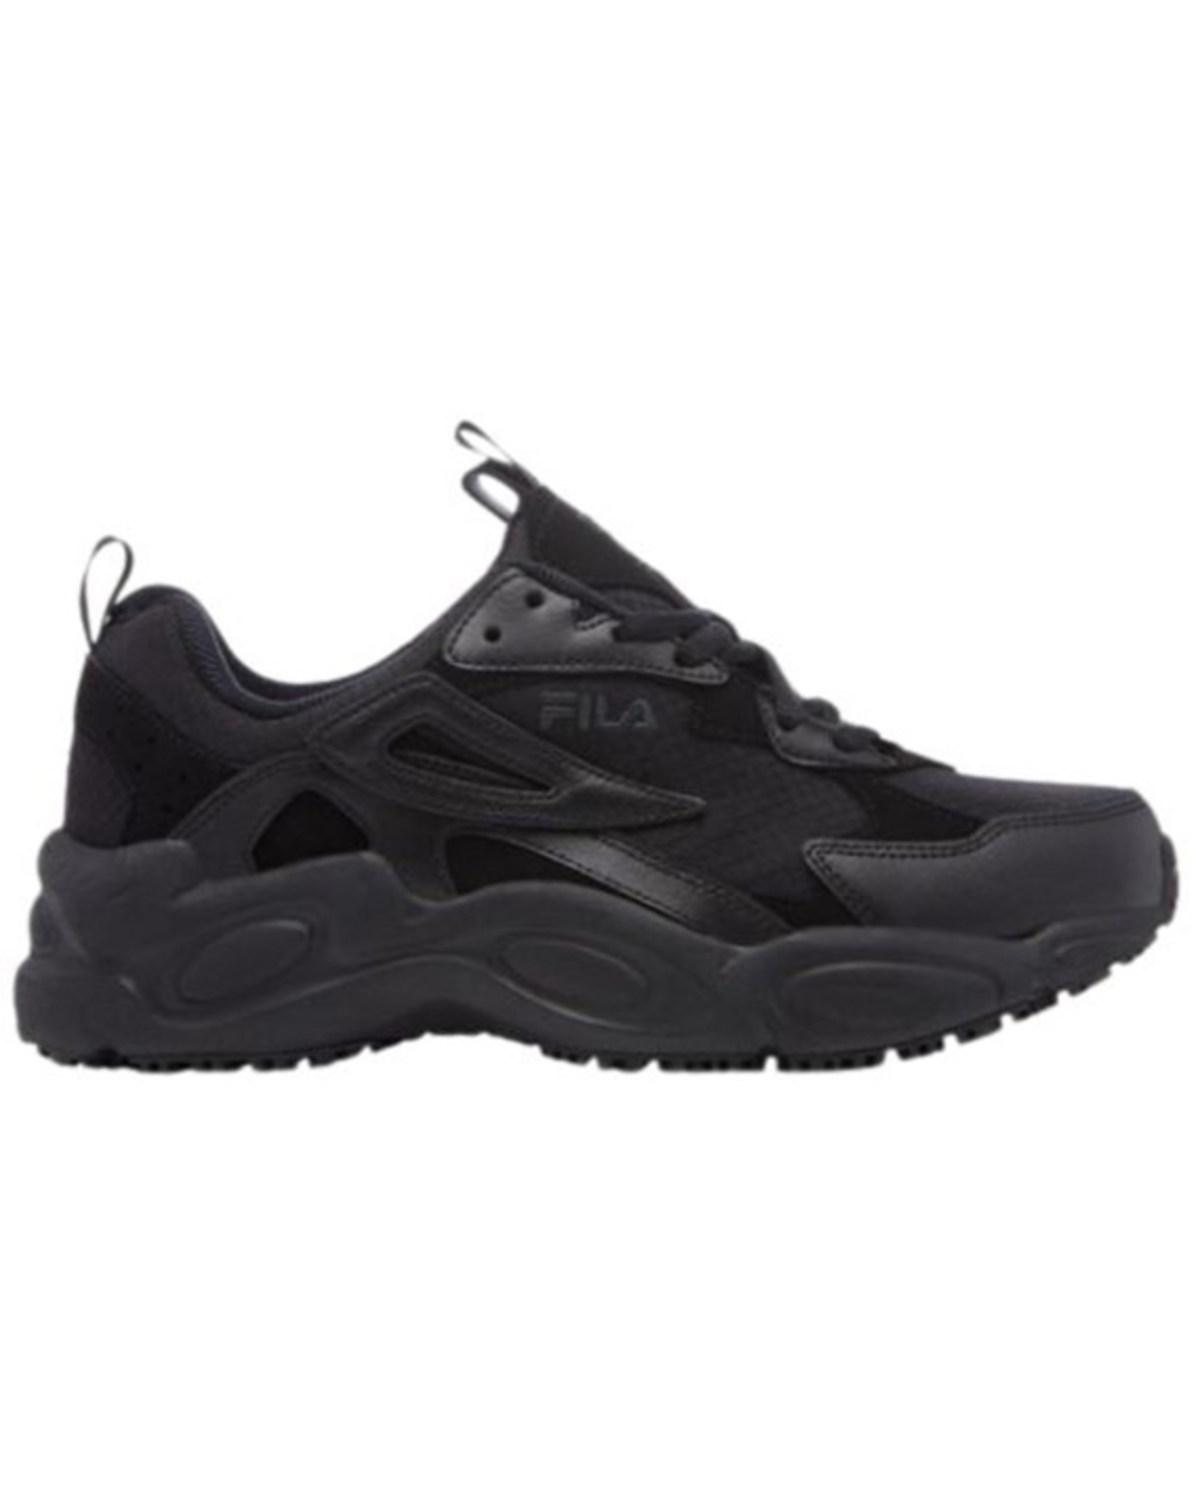 Fila Men's Memory Lateshift Slip Resistant Waterproof Work Shoes - Soft Toe